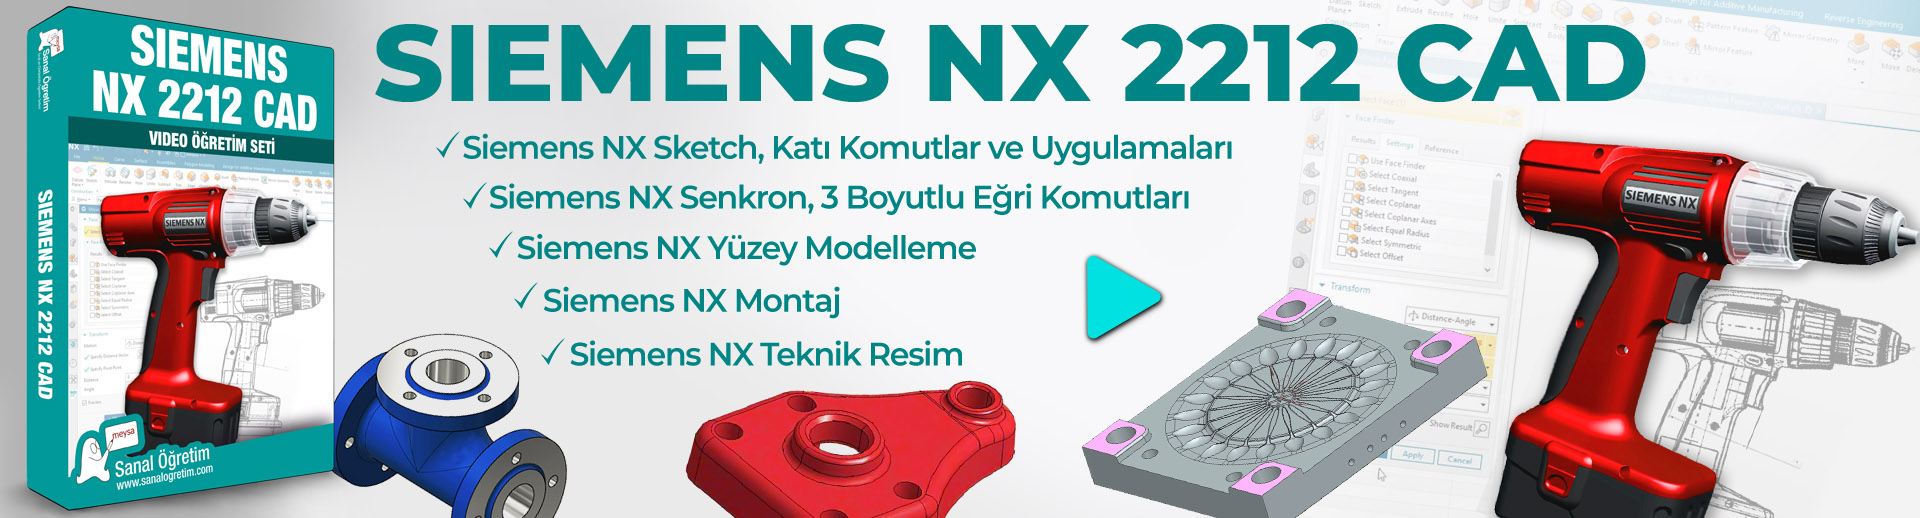 Siemens NX 2212 CAD